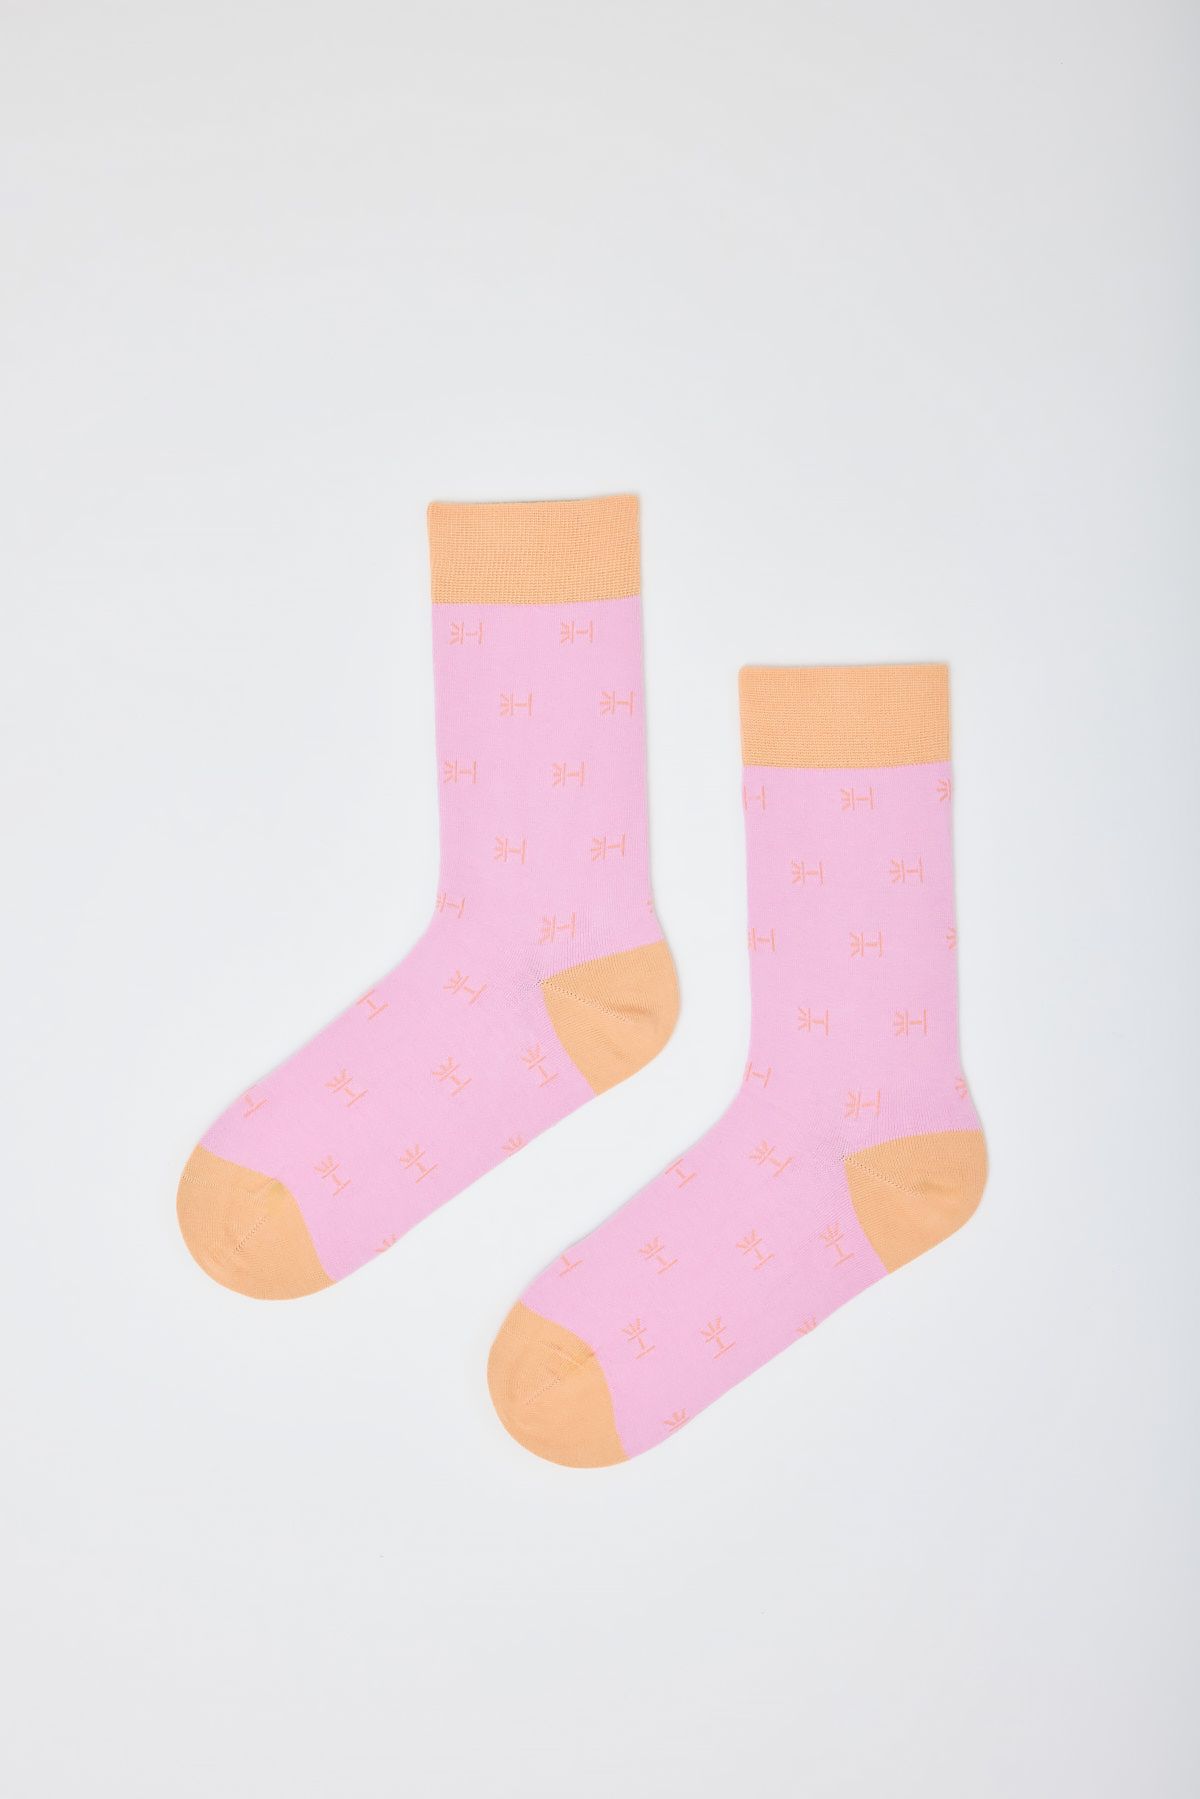 Rosa-/apricotfarbene USB-Merchandise Socken